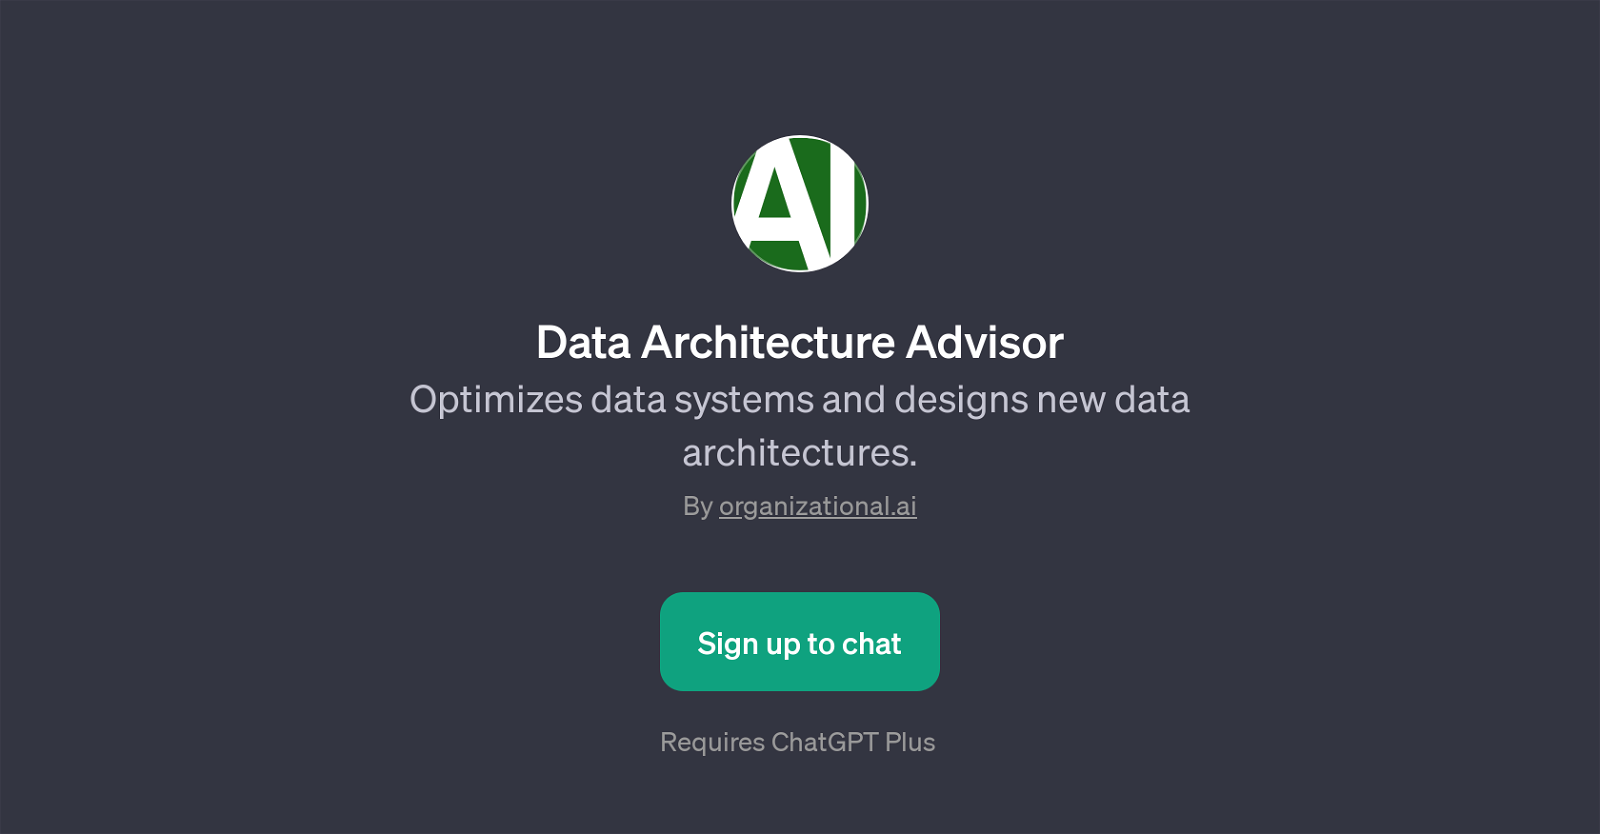 Data Architecture Advisor website